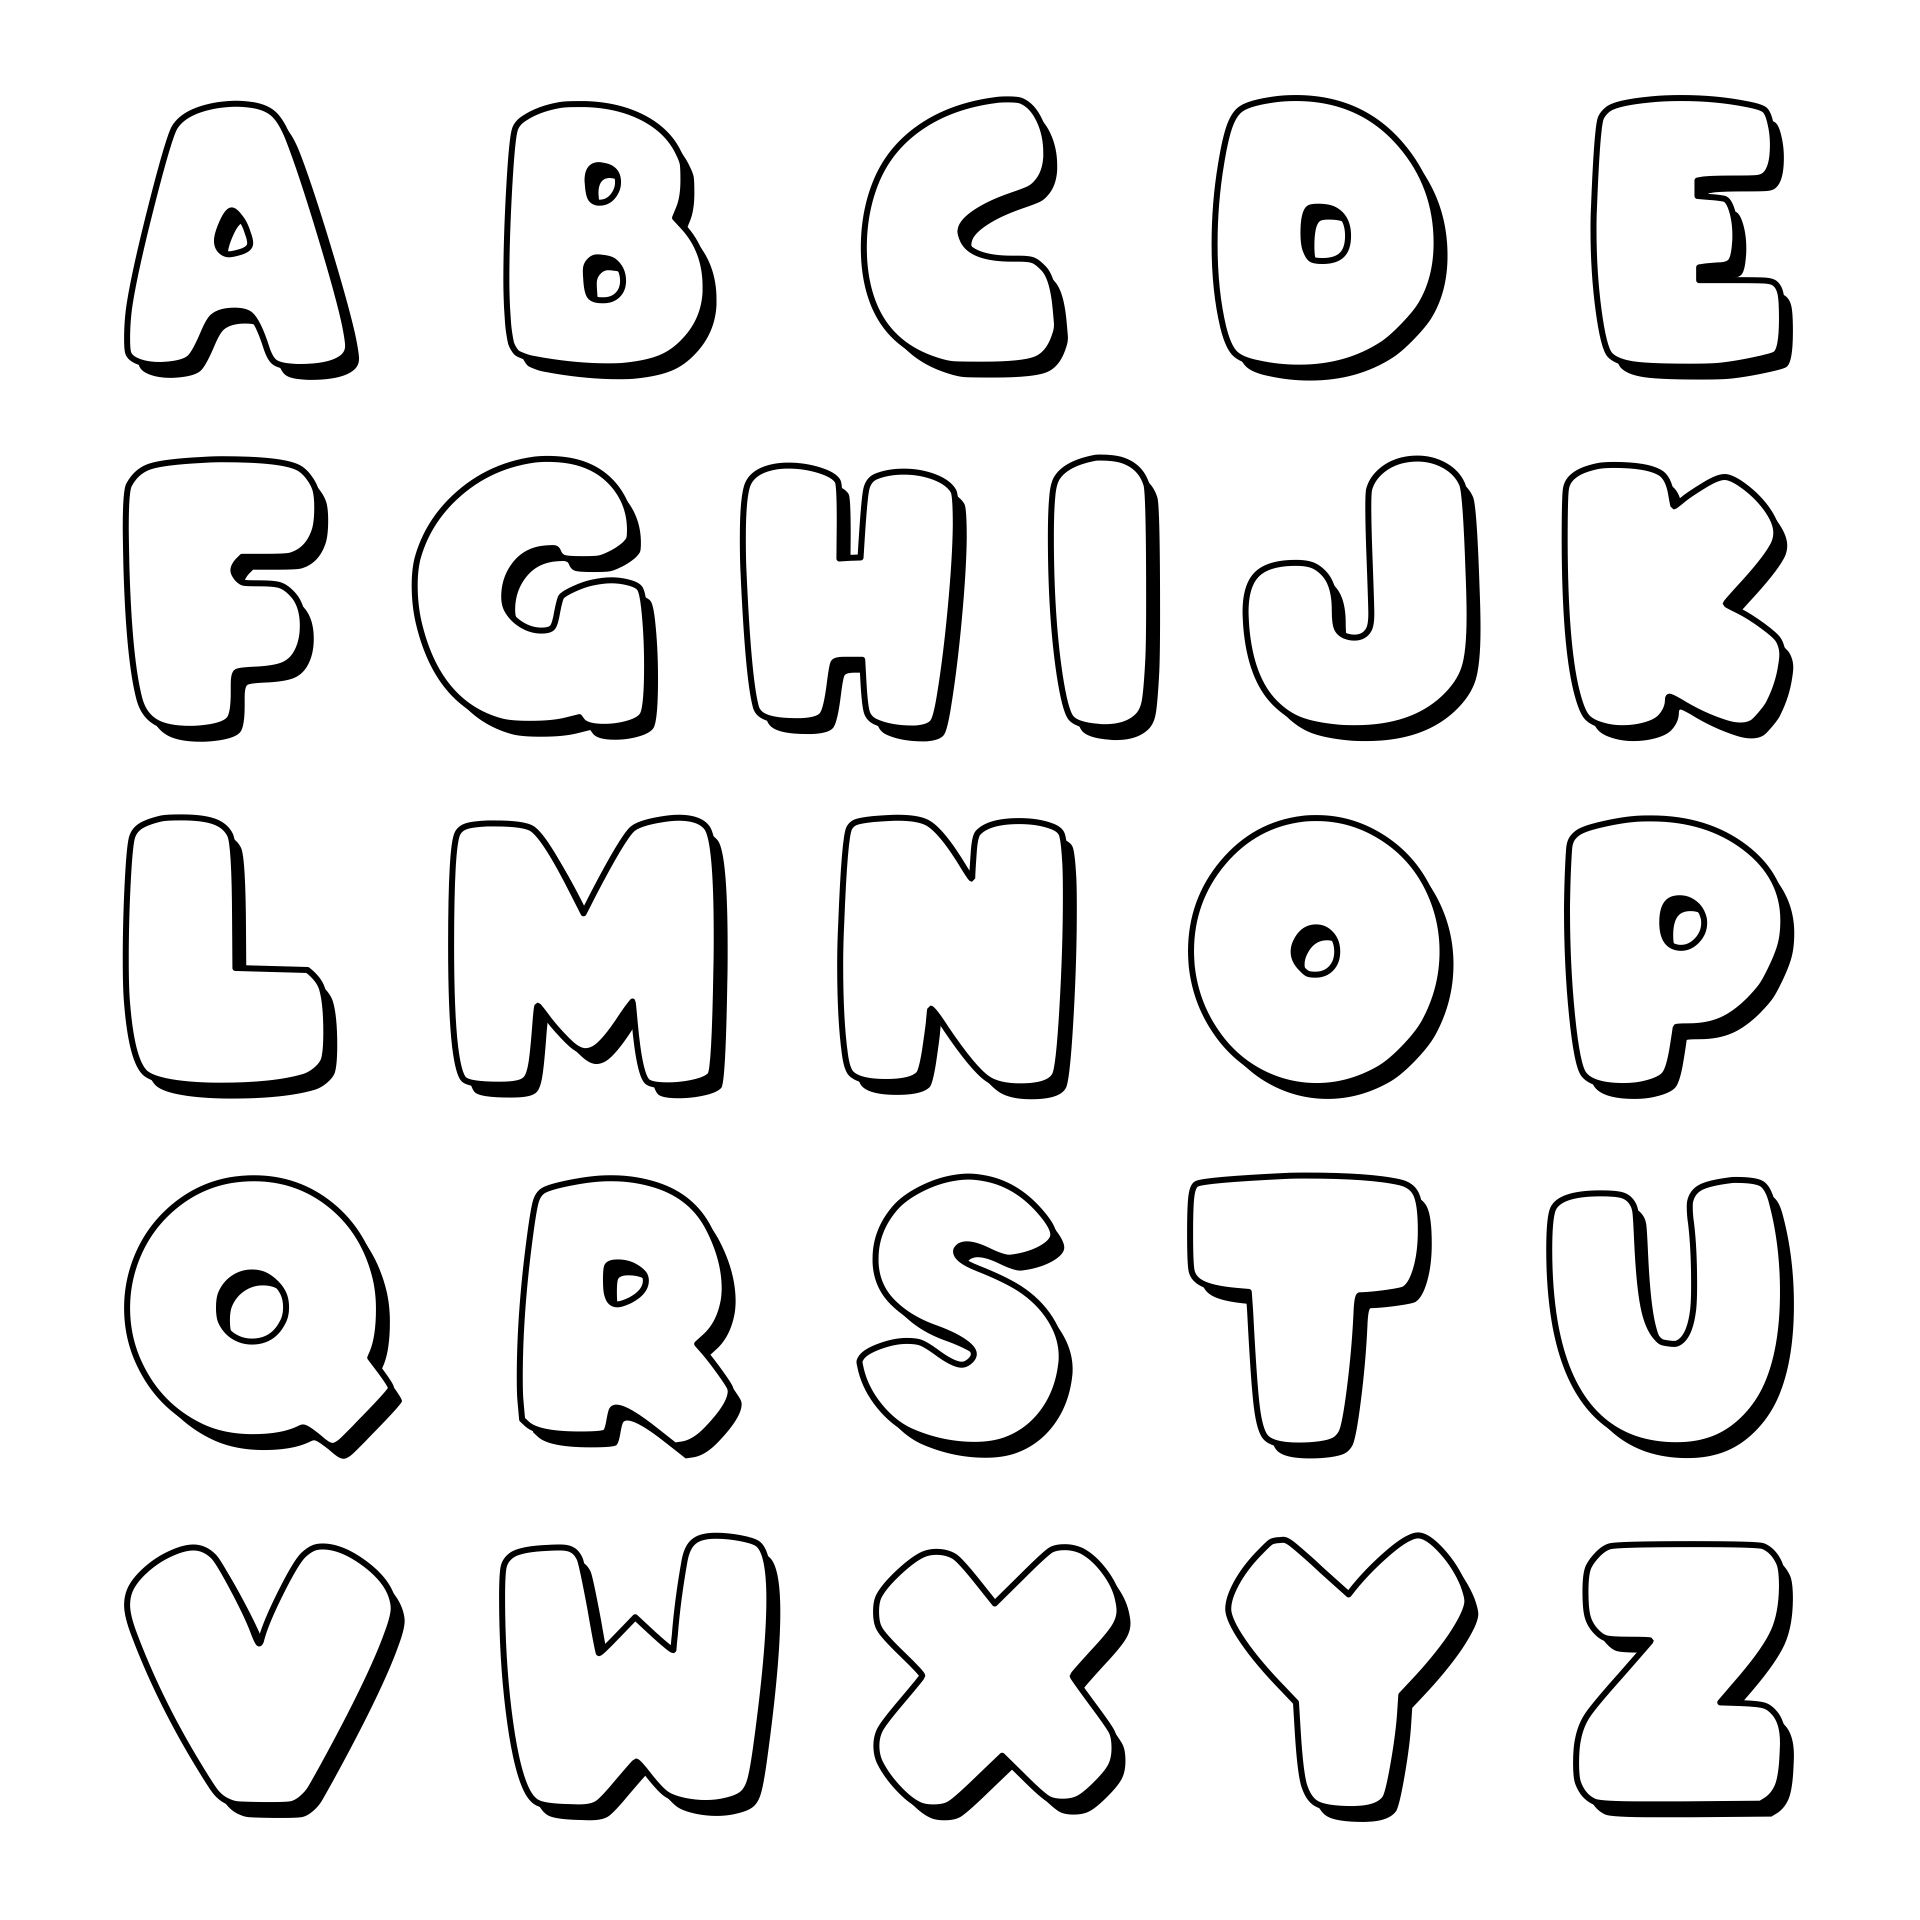 7 Best Images of Big Printable Bubble Letters - Printable Bubble Letter ...